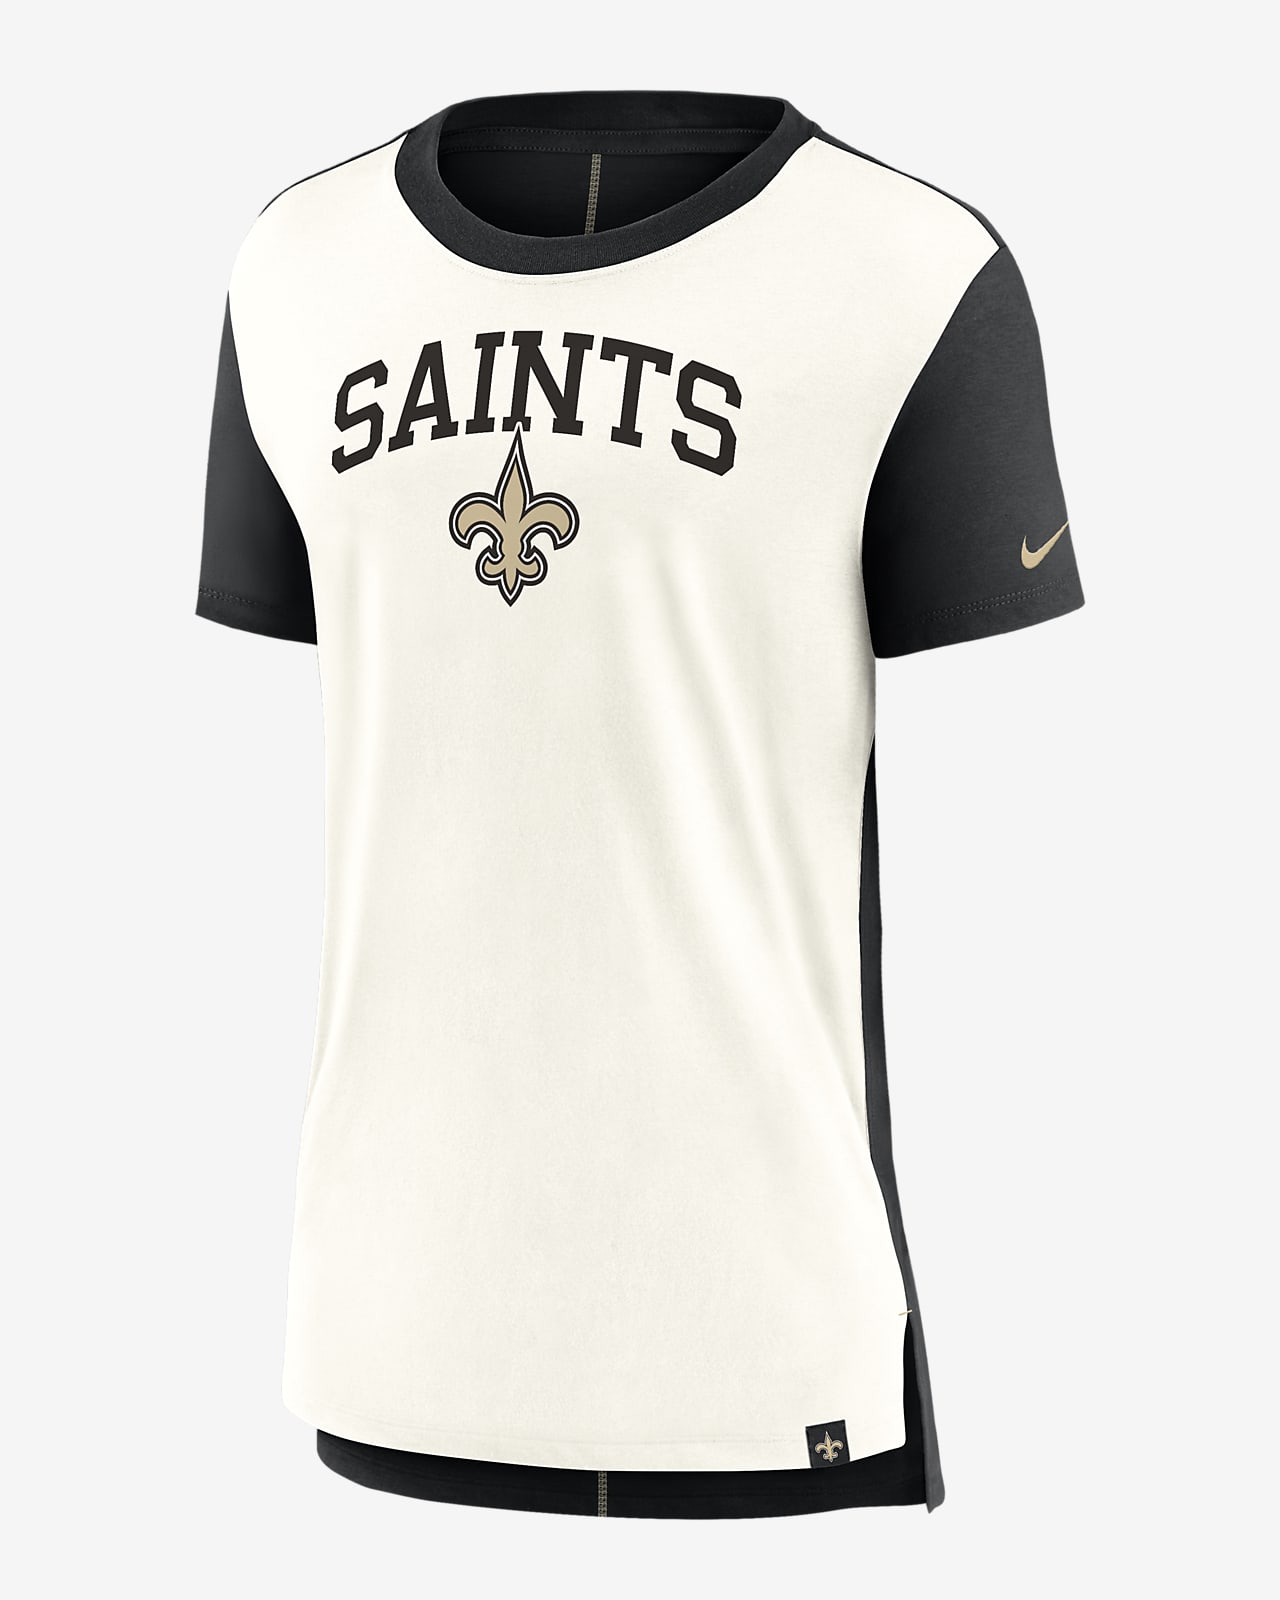 Playera Nike de la NFL para mujer New Orleans Saints